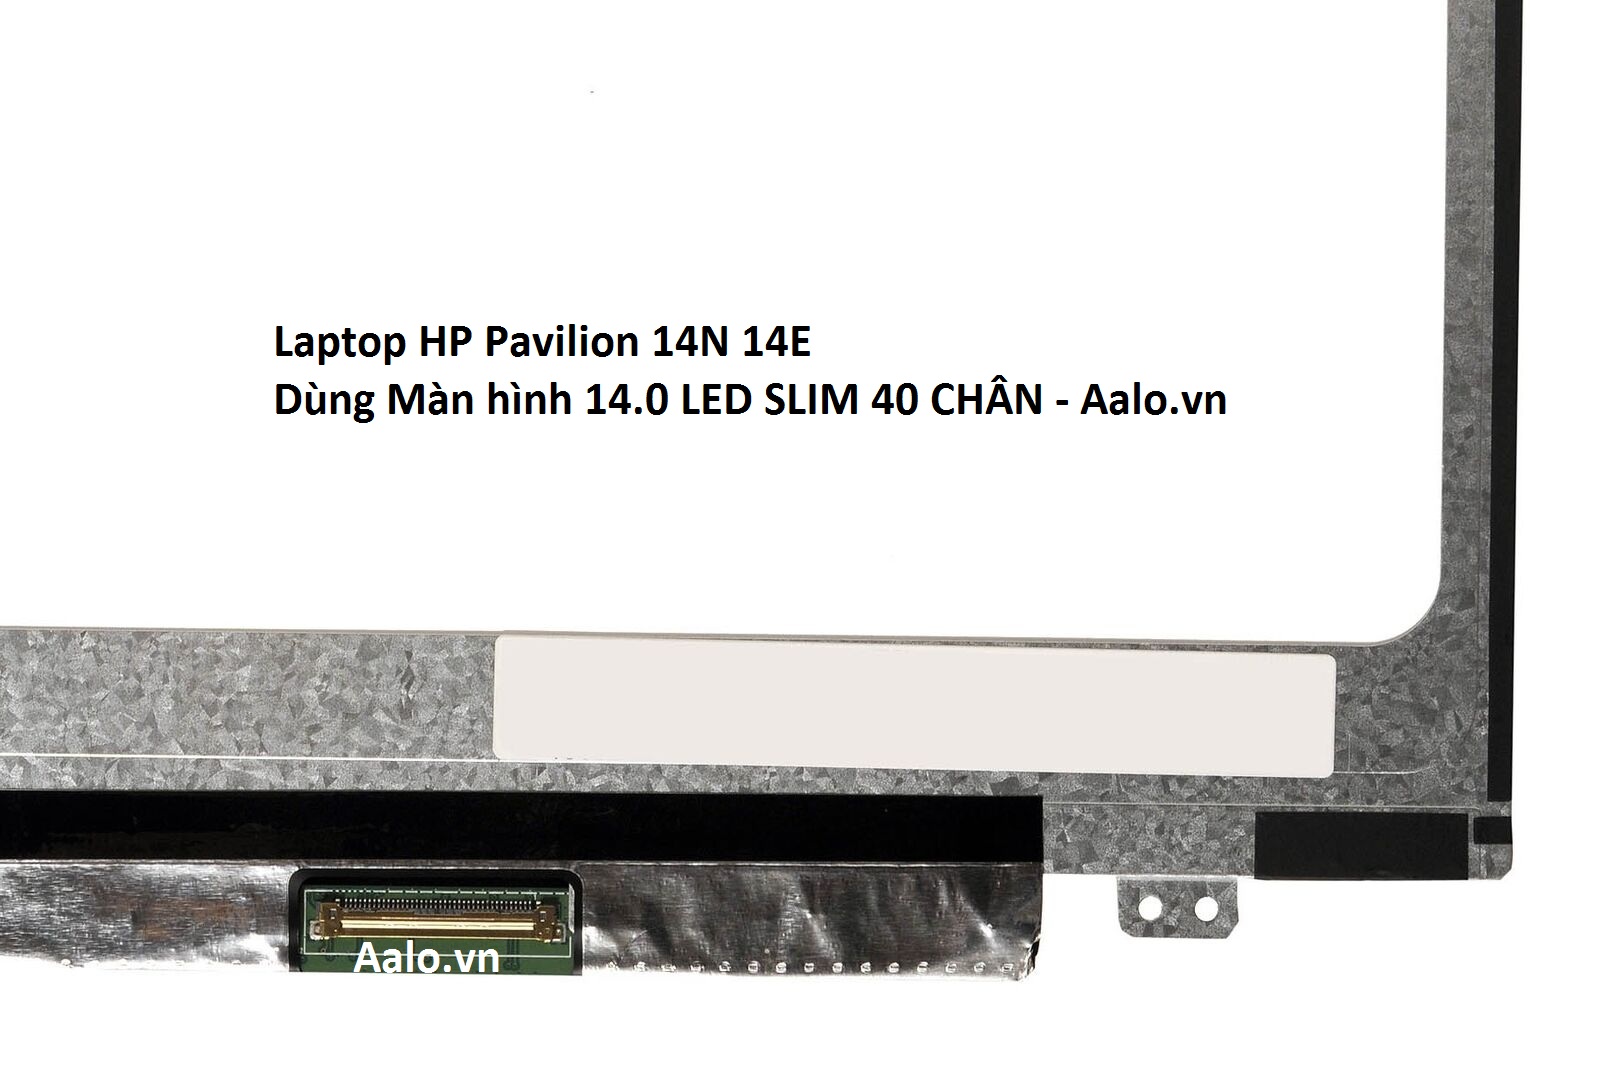 Màn hình Laptop HP Pavilion 14N 14E - Aalo.vn